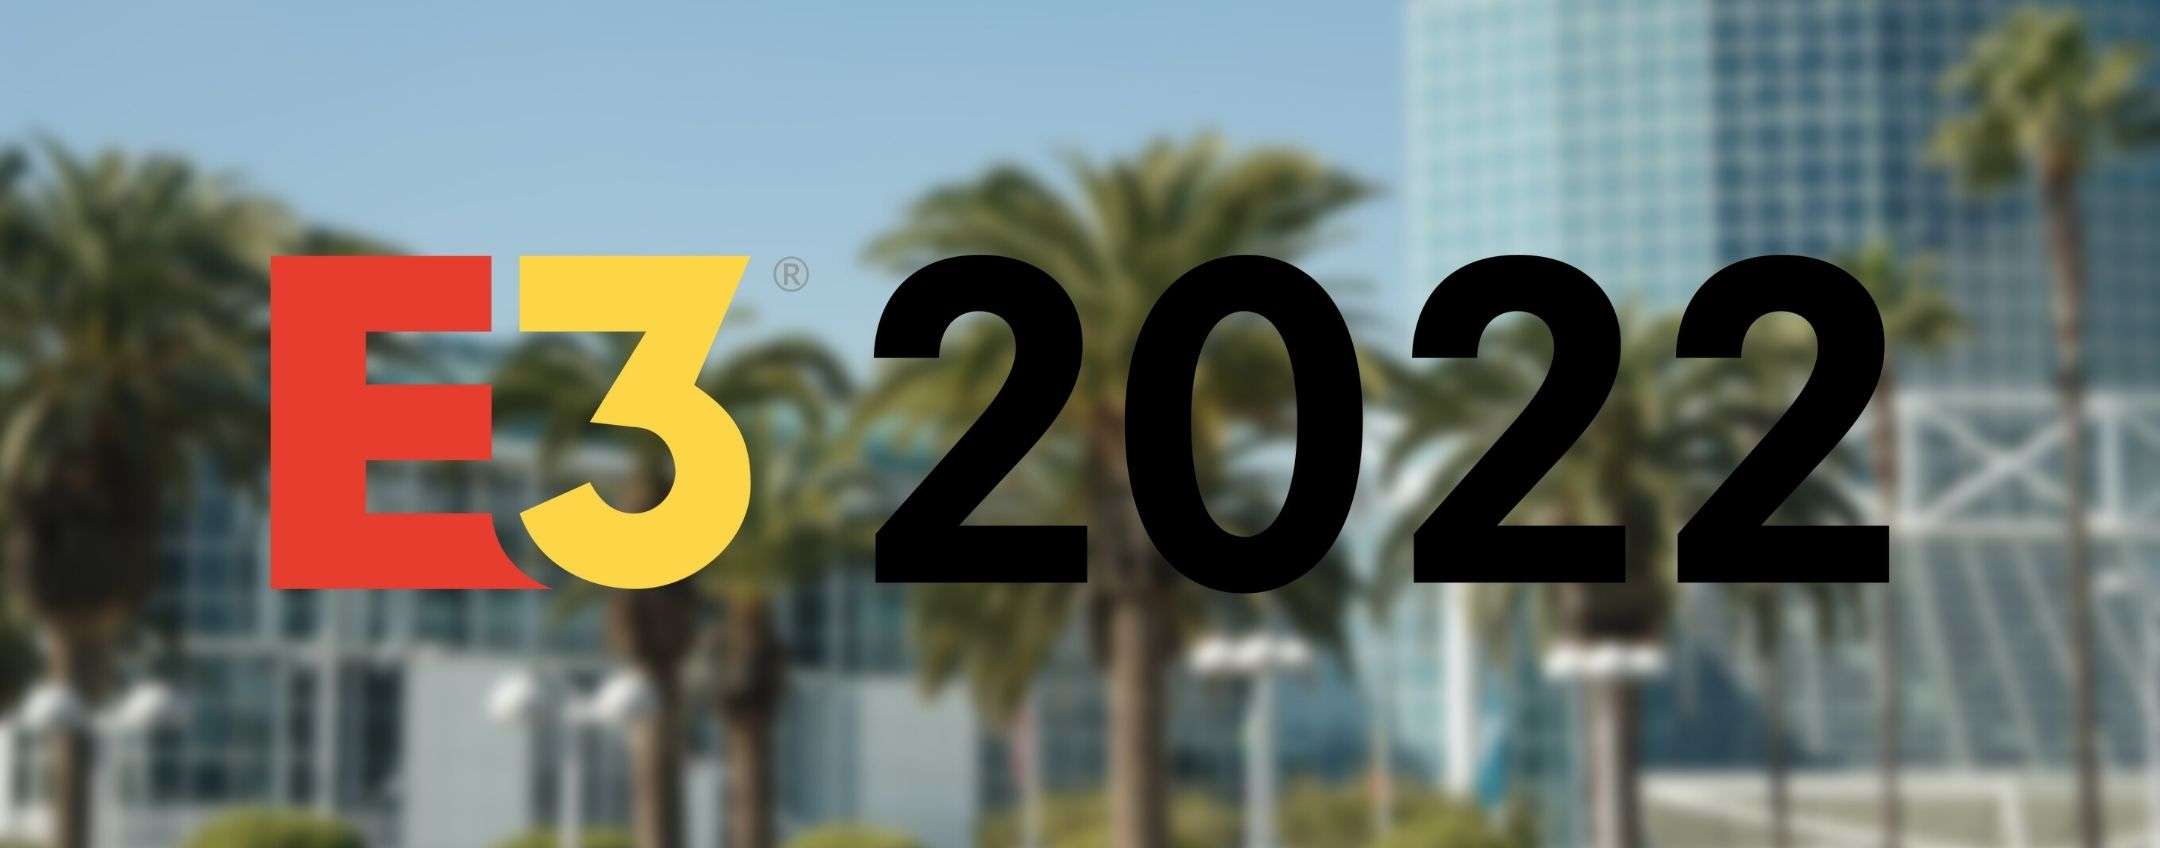 E3 2022 digitale